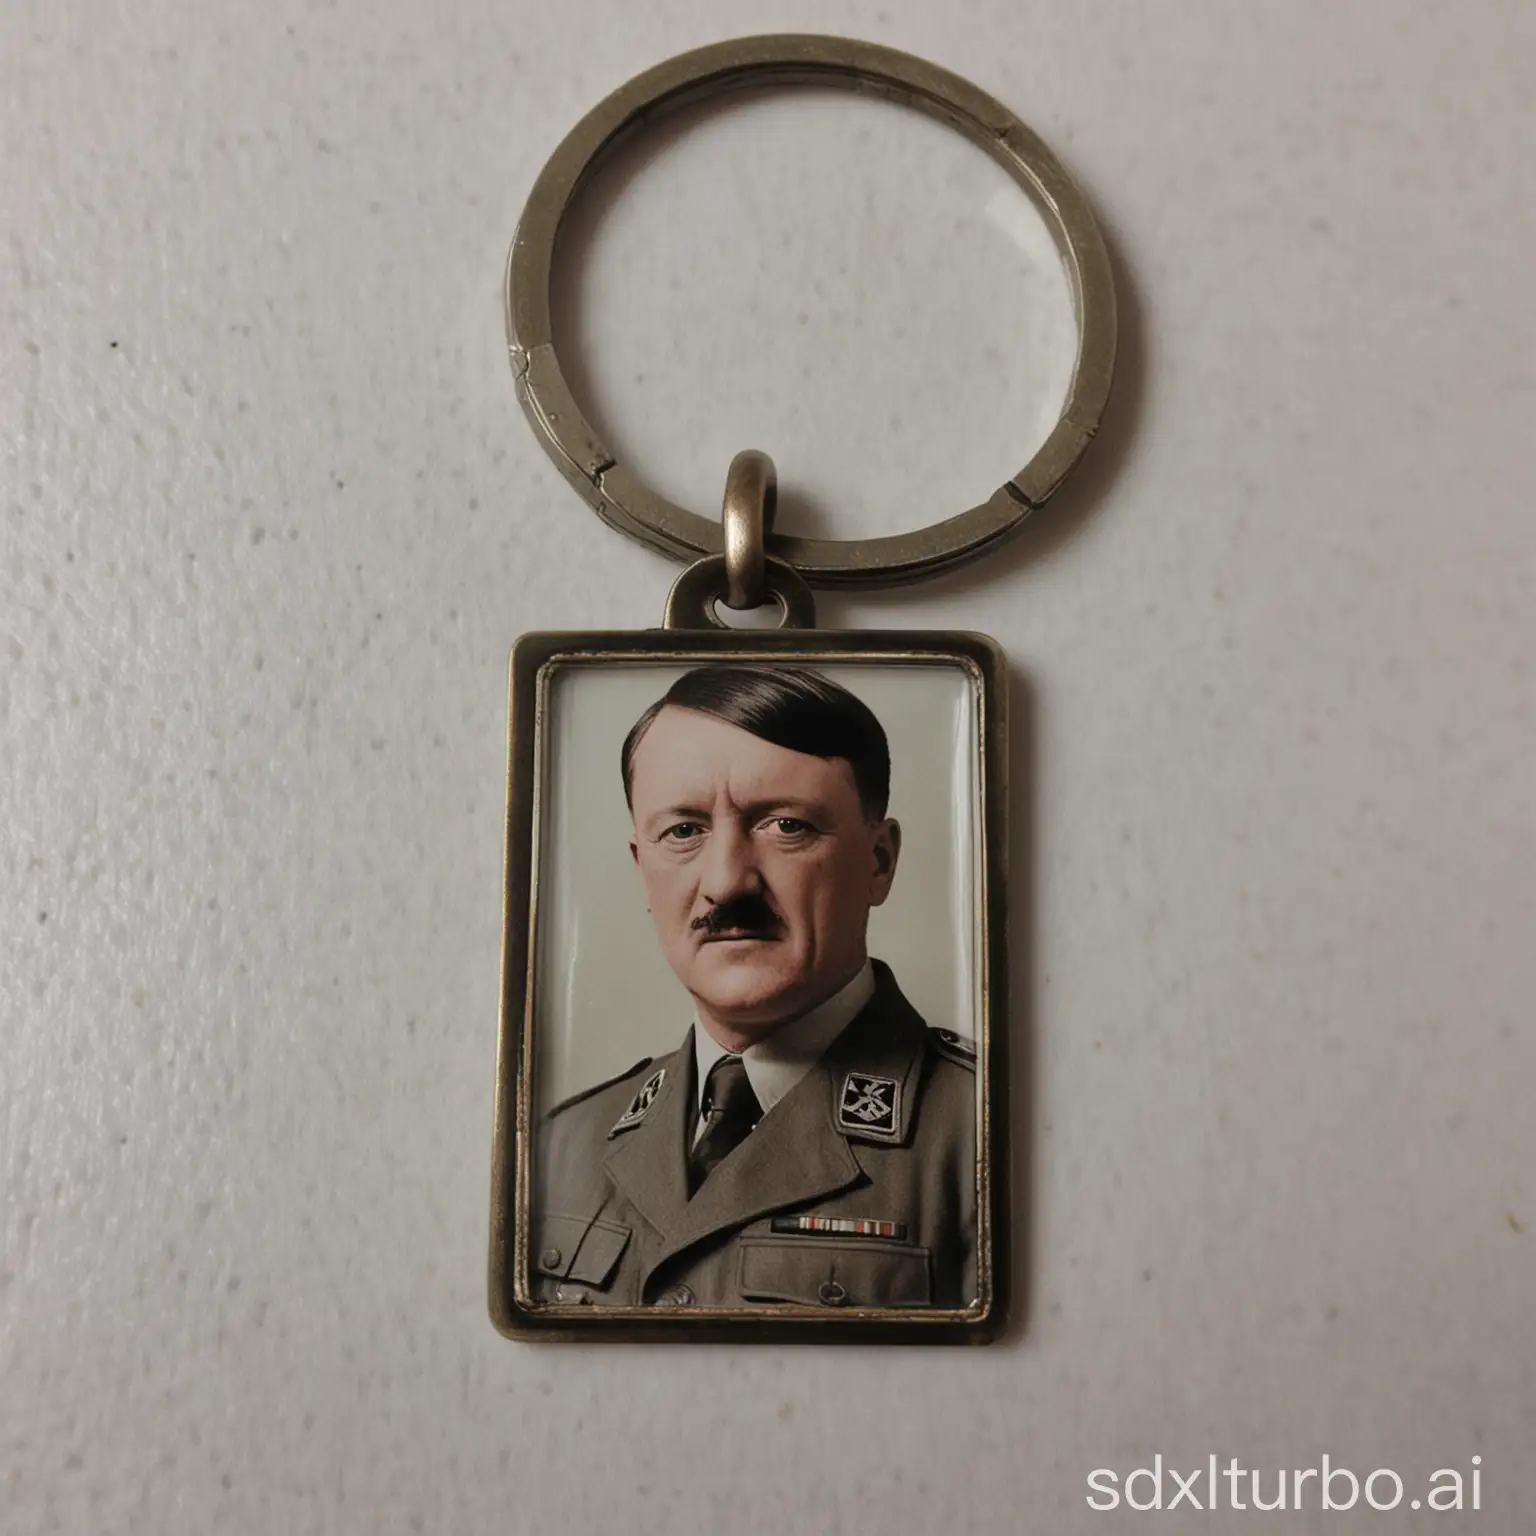 Vintage-Keyring-Featuring-an-Image-of-Adolf-Hitler